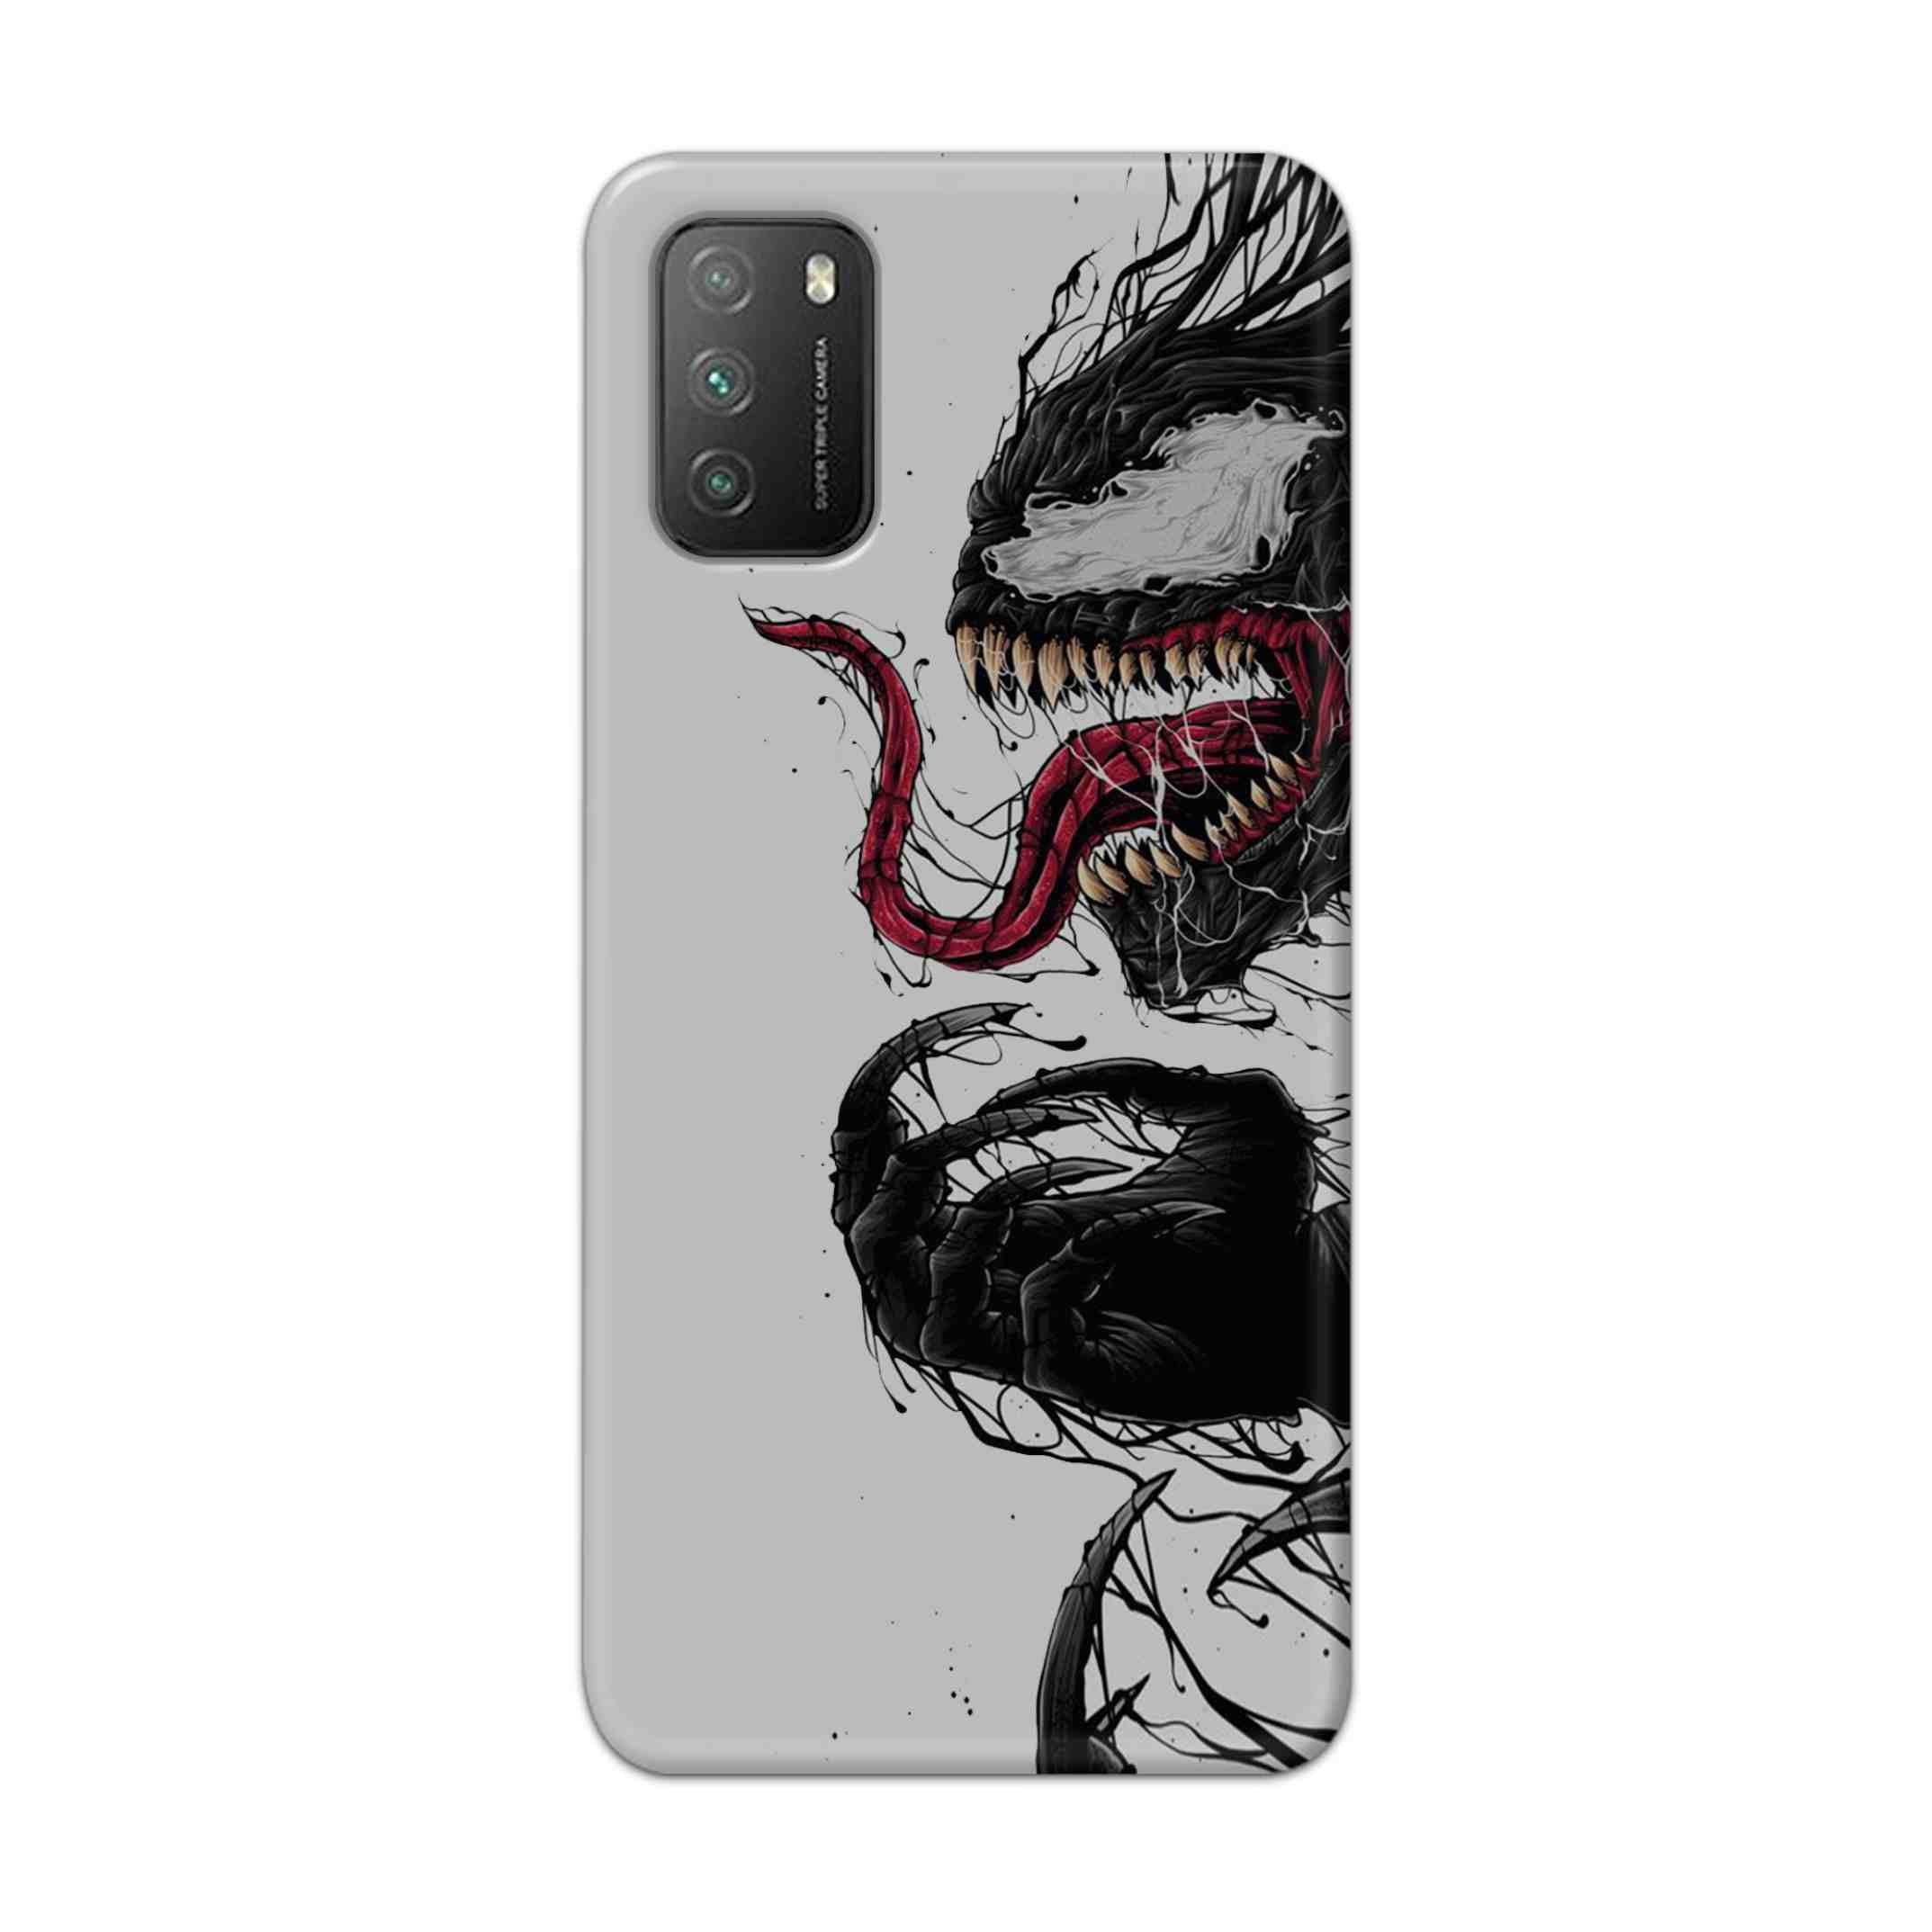 Buy Venom Crazy Hard Back Mobile Phone Case Cover For Poco M3 Online